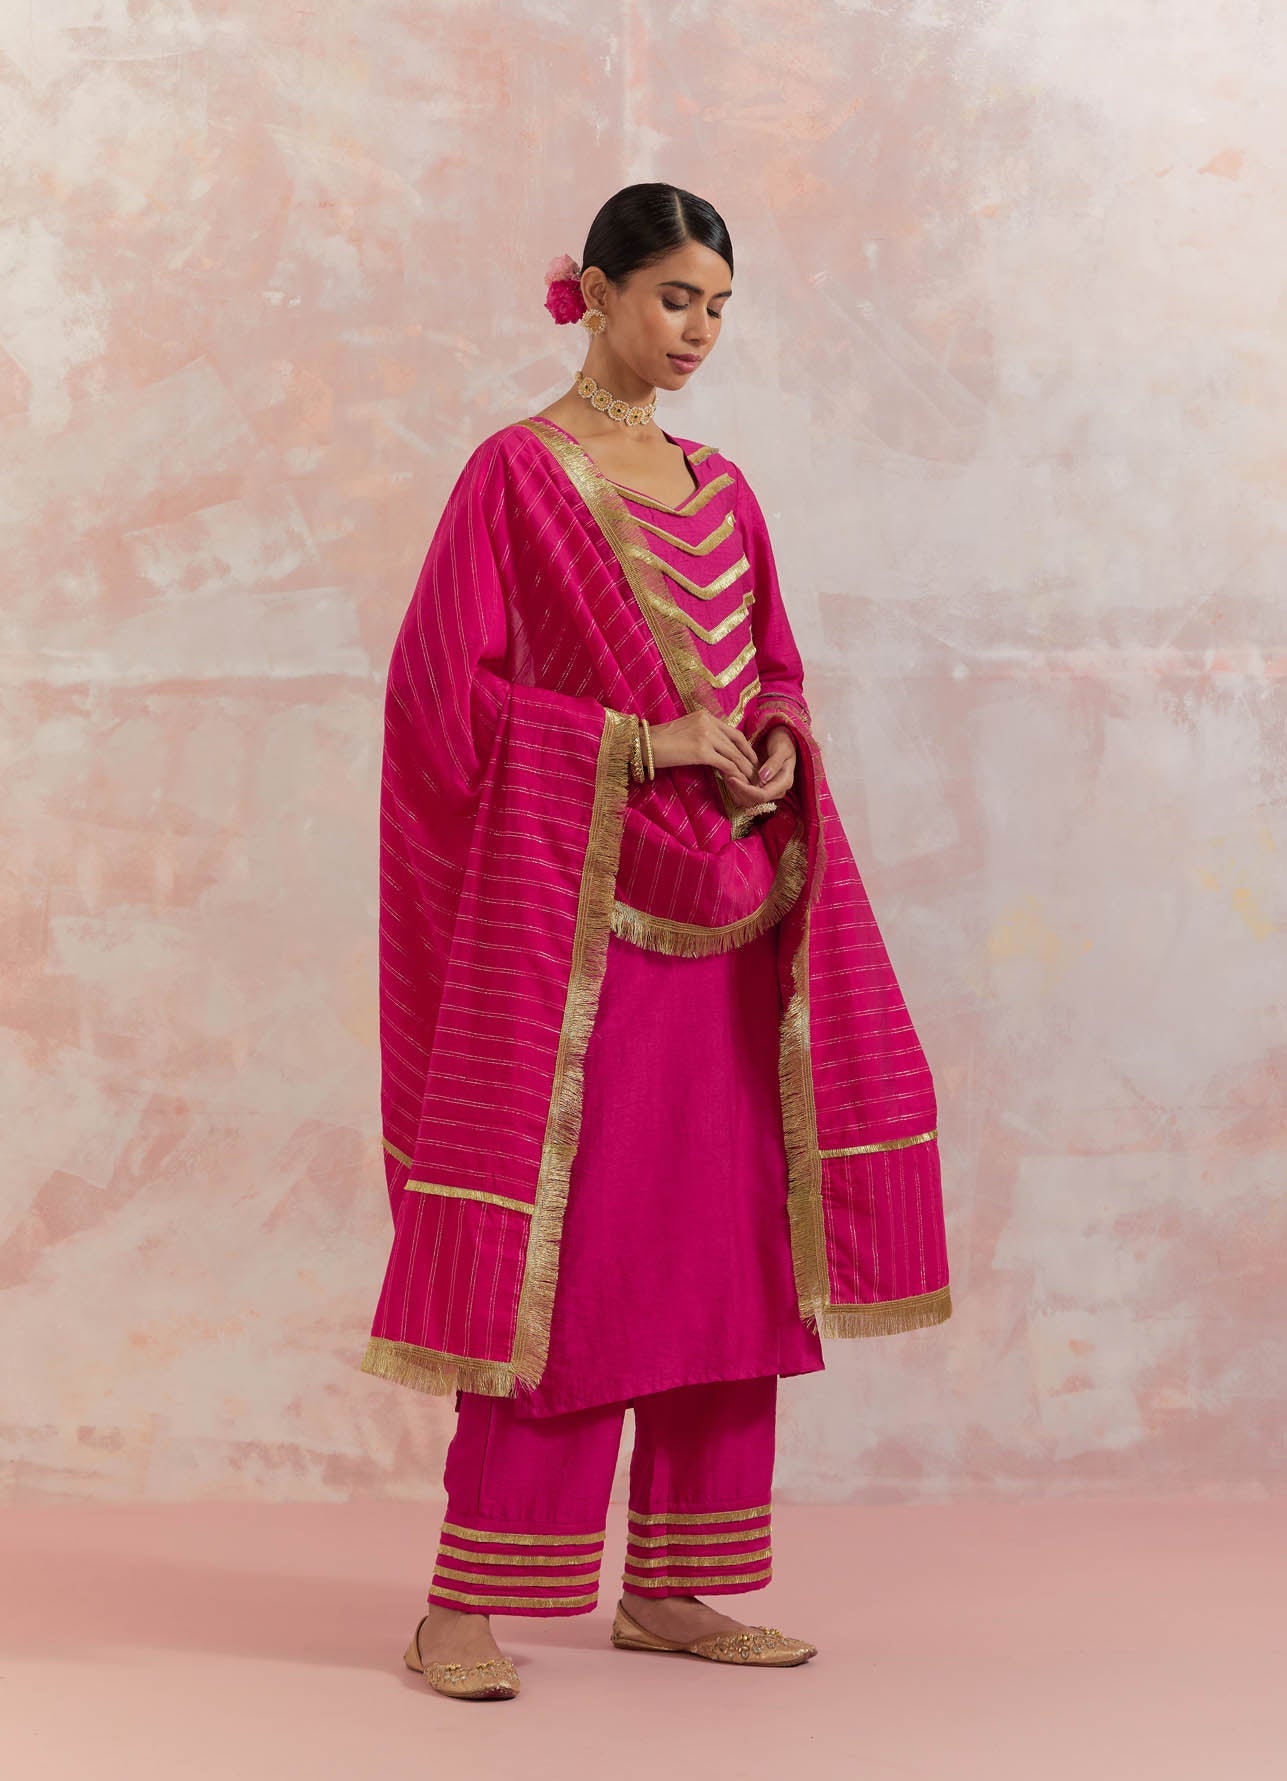 Pink Rooh Kurta - The Indian Cause